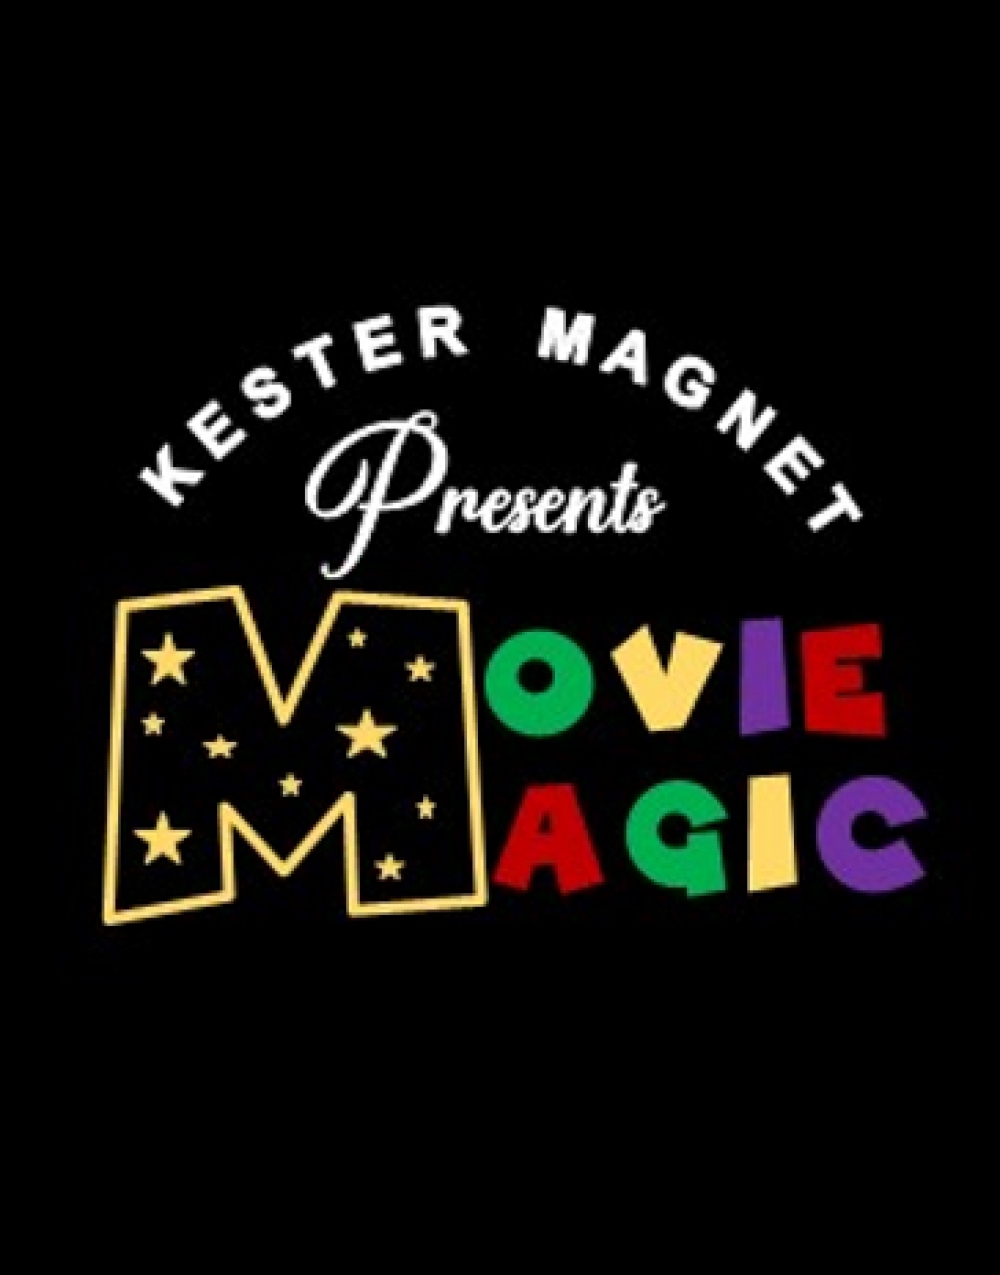 Movie Magic at Kester Magnet Elementary